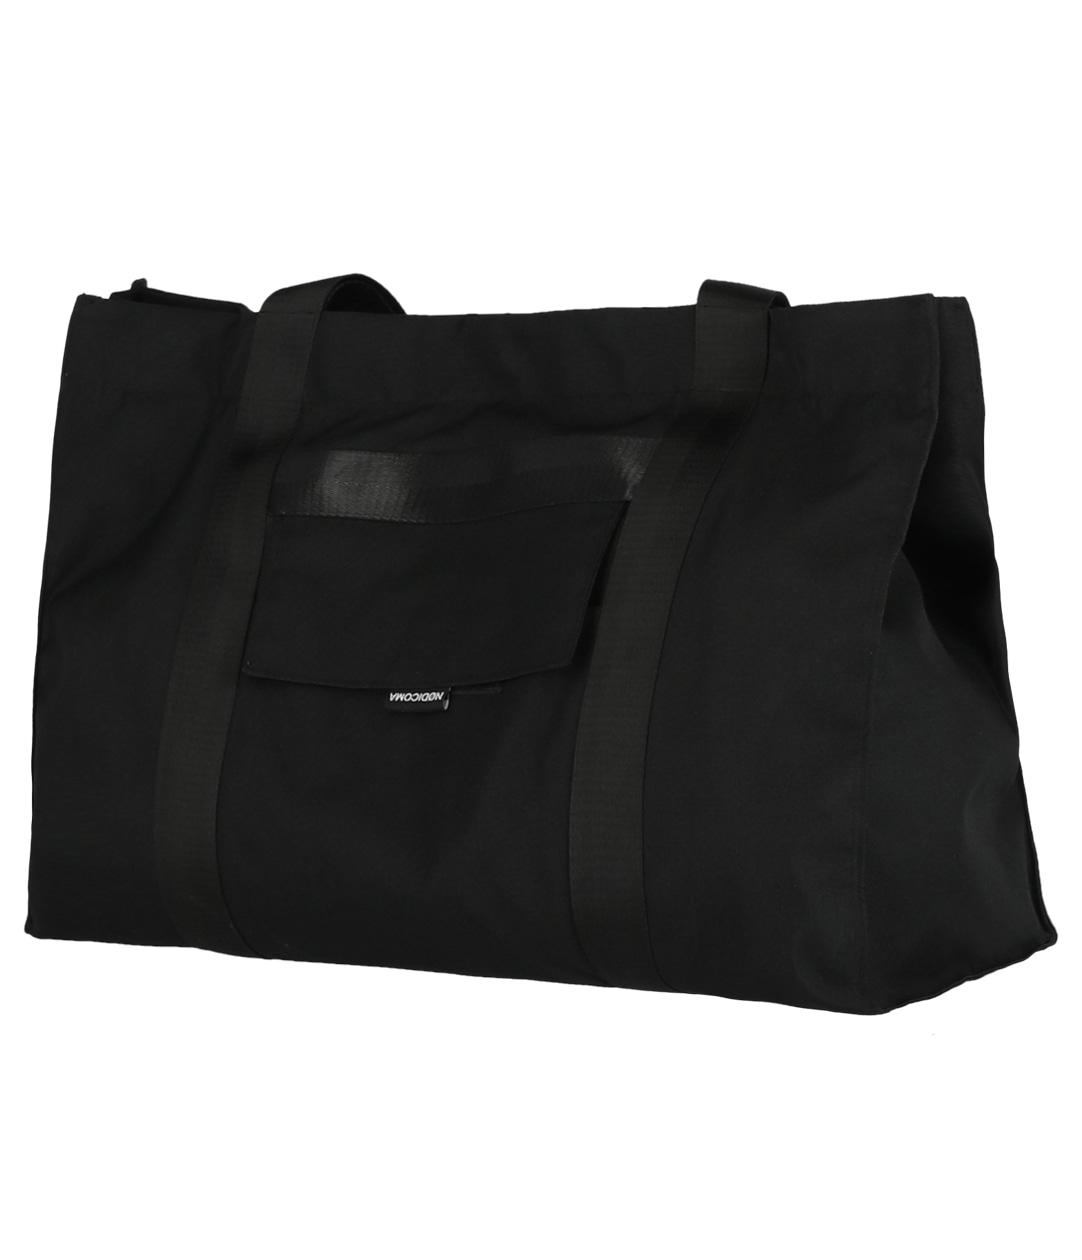 Hybrid satchel bag